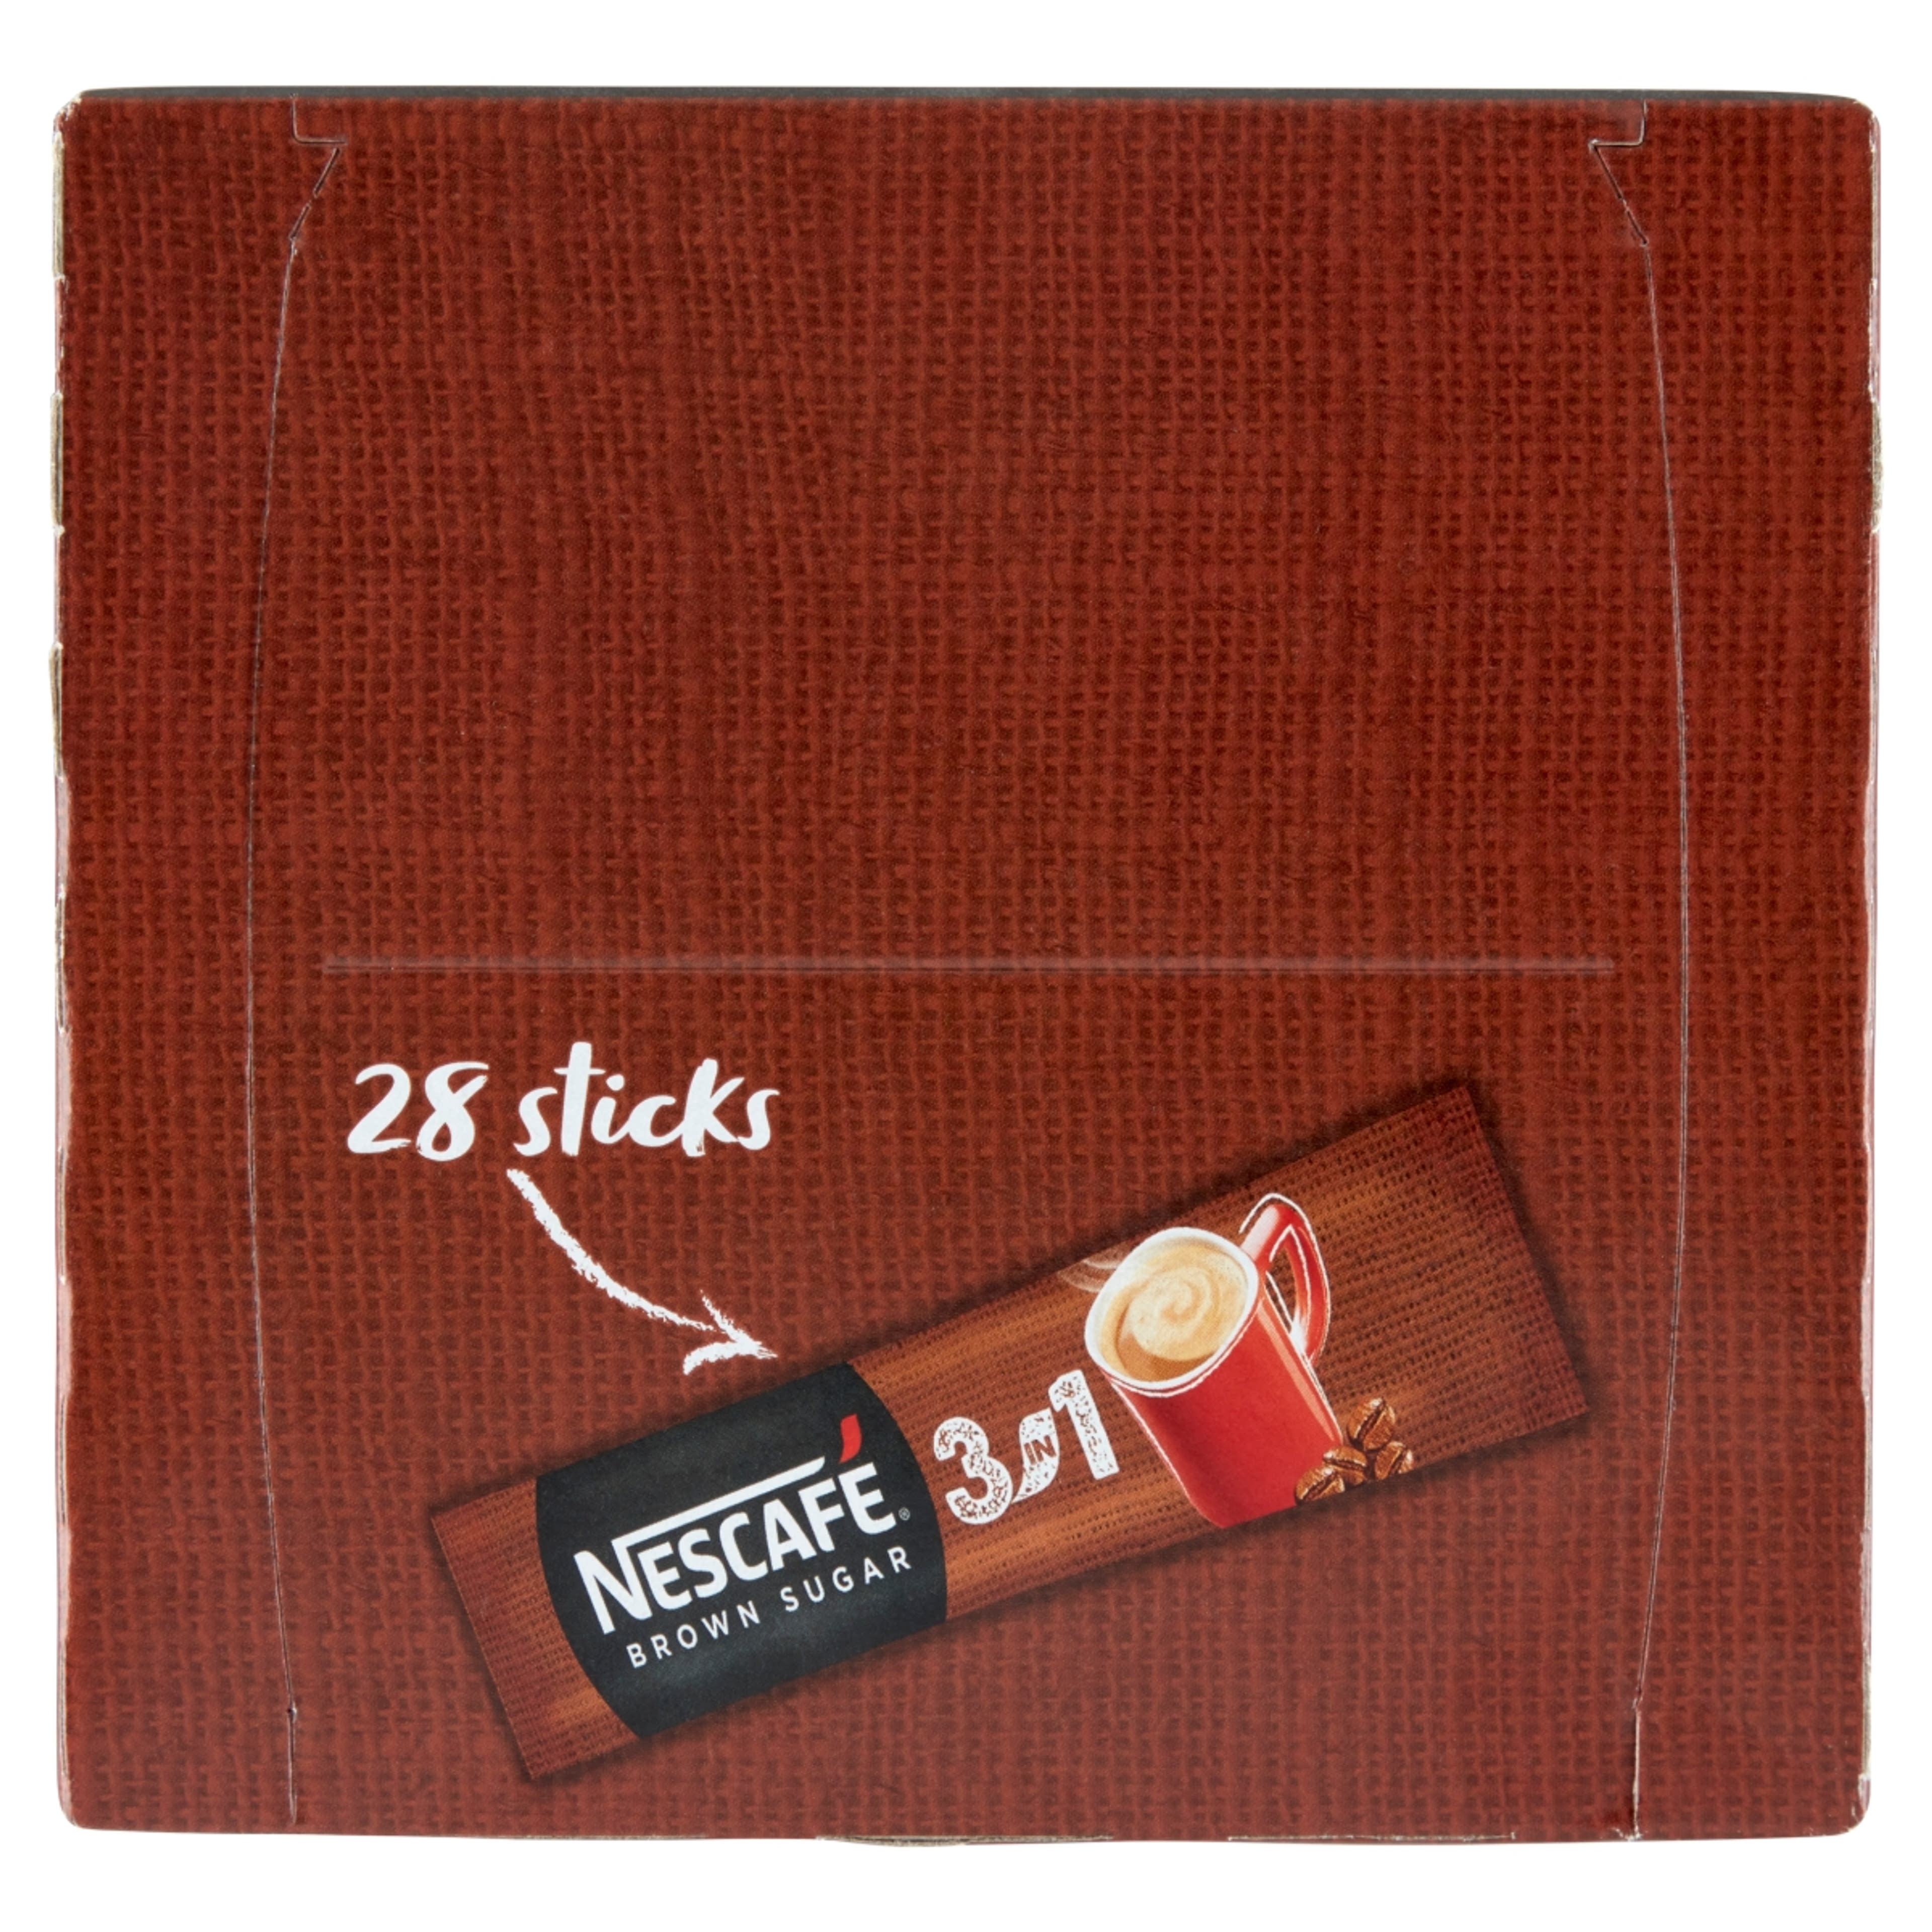 Nescafé 3in1 instant kávé barna cukorral - 28 db-1